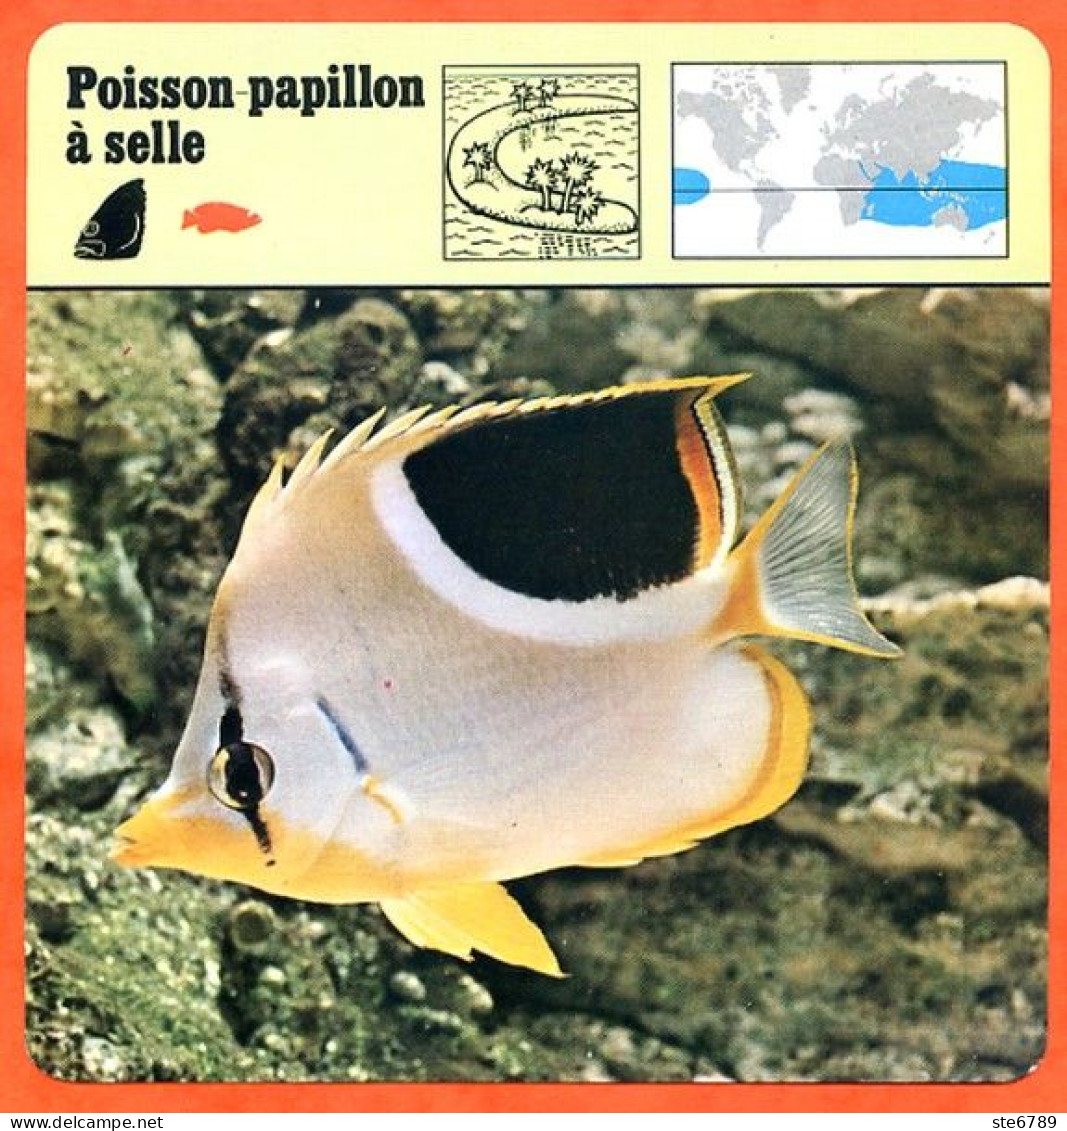 POISSON PAPILLON A SELLE  Animaux Animal Poissons Fiche Illustree Documentée - Animaux